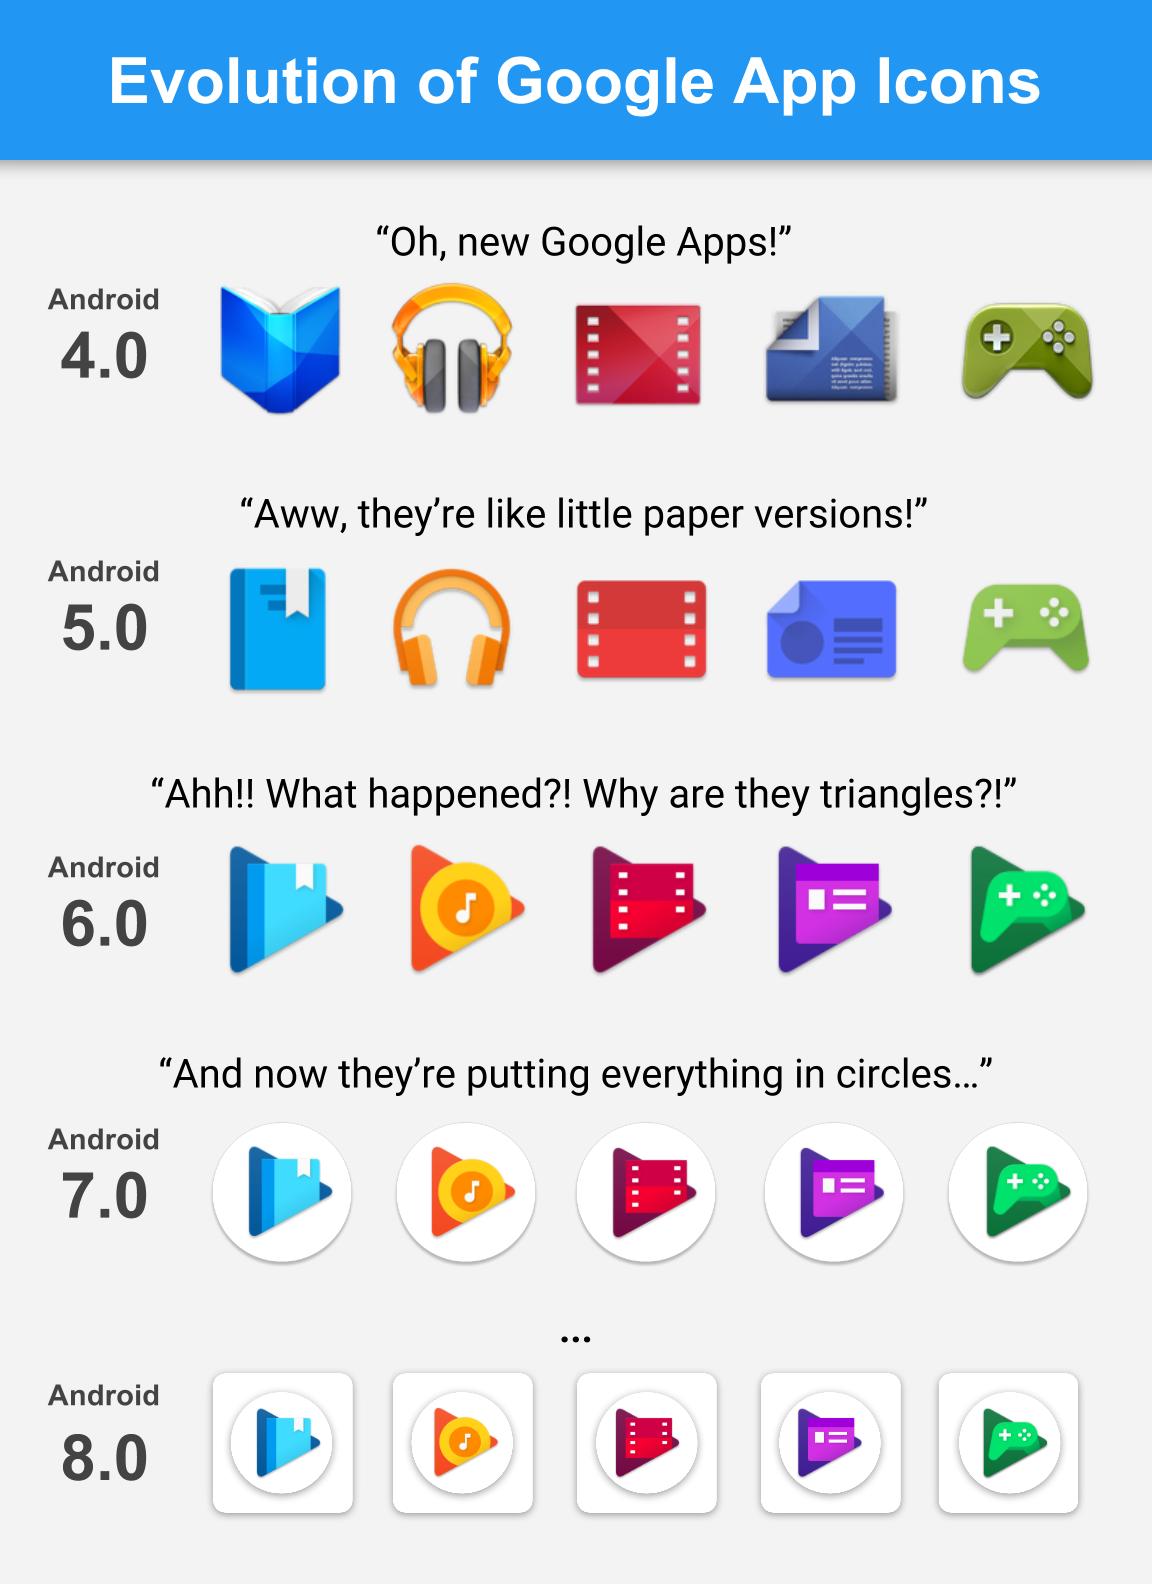 Evolution of Google App Icons_BlackMamba.jpg